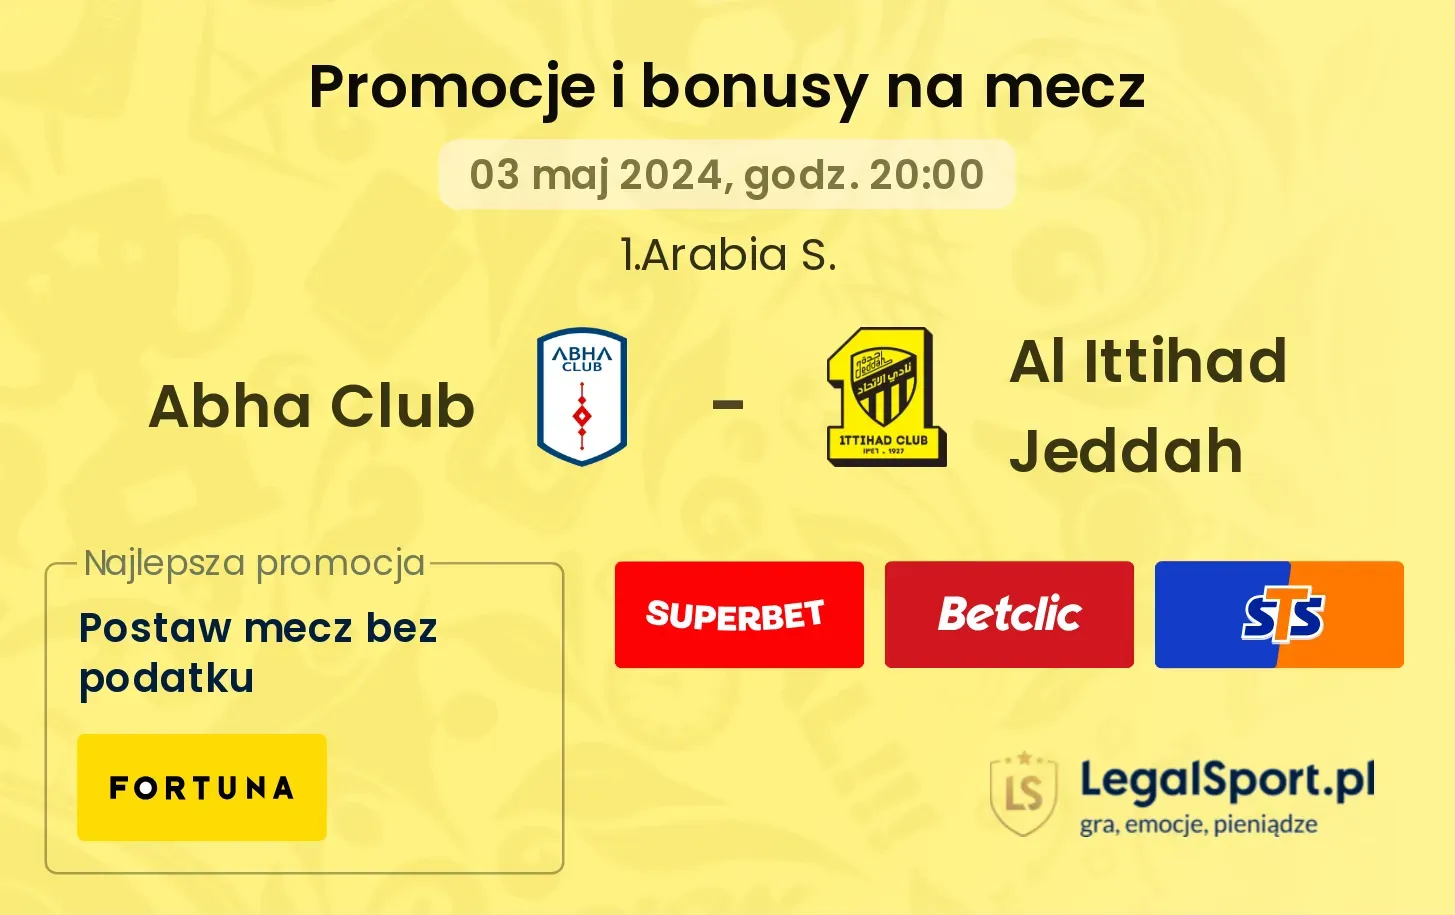 Abha Club - Al Ittihad Jeddah promocje bonusy na mecz